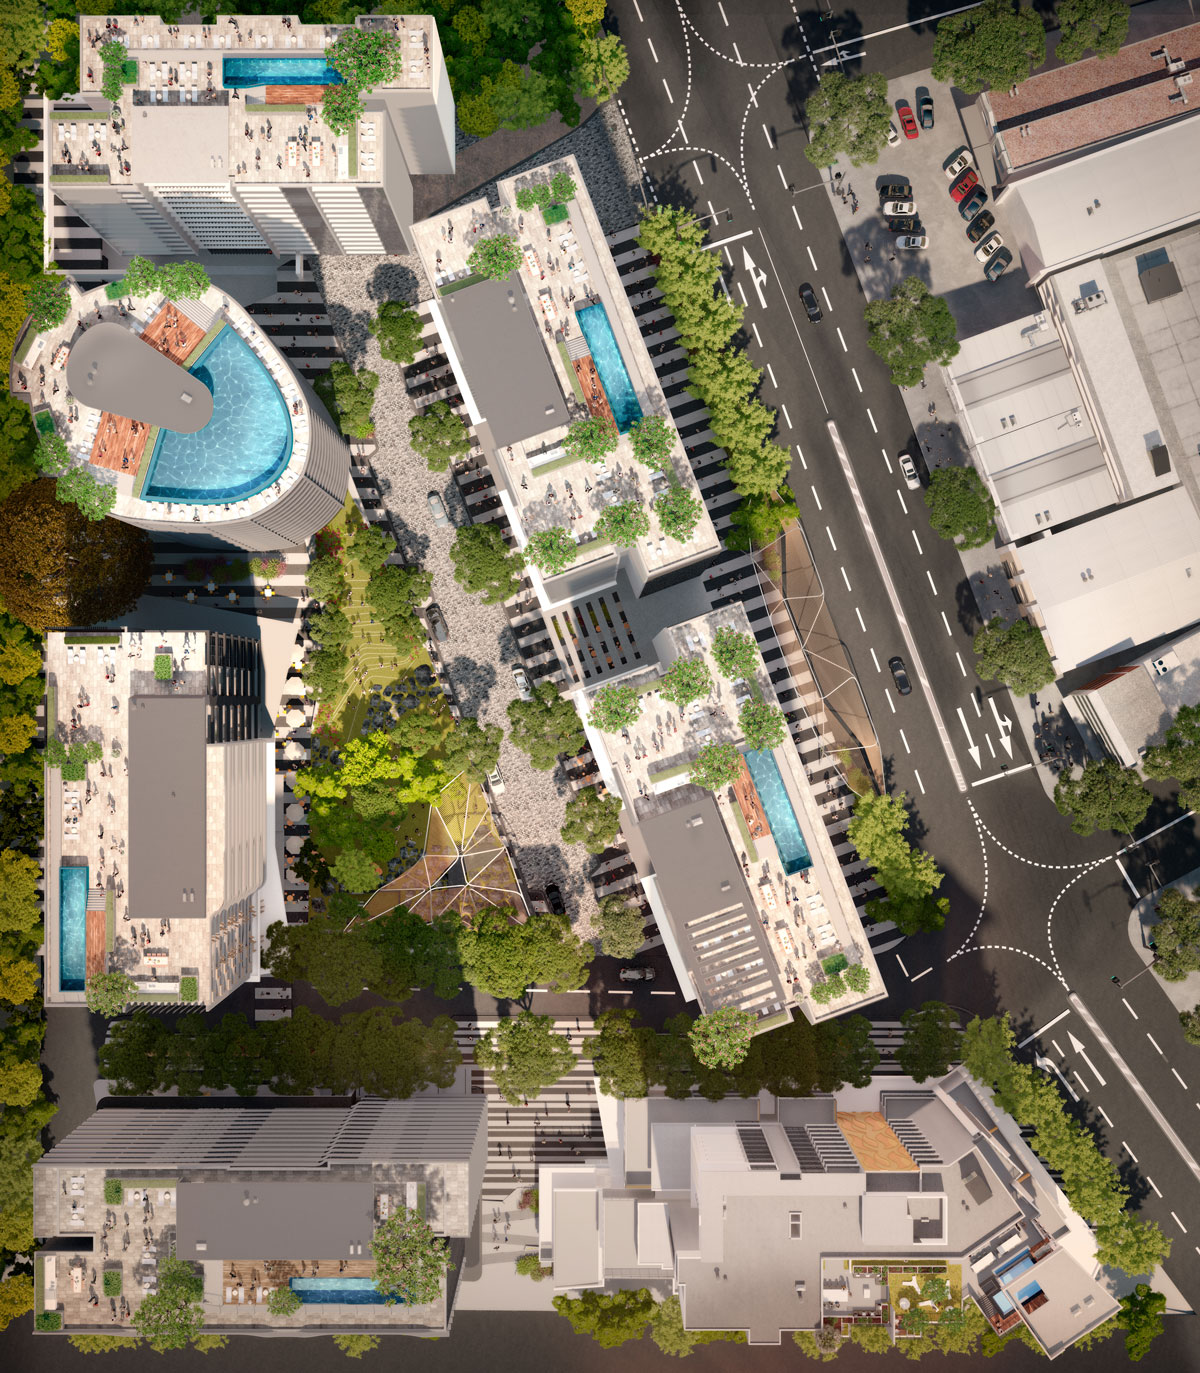 Artist's impression of South City Square Masterplan